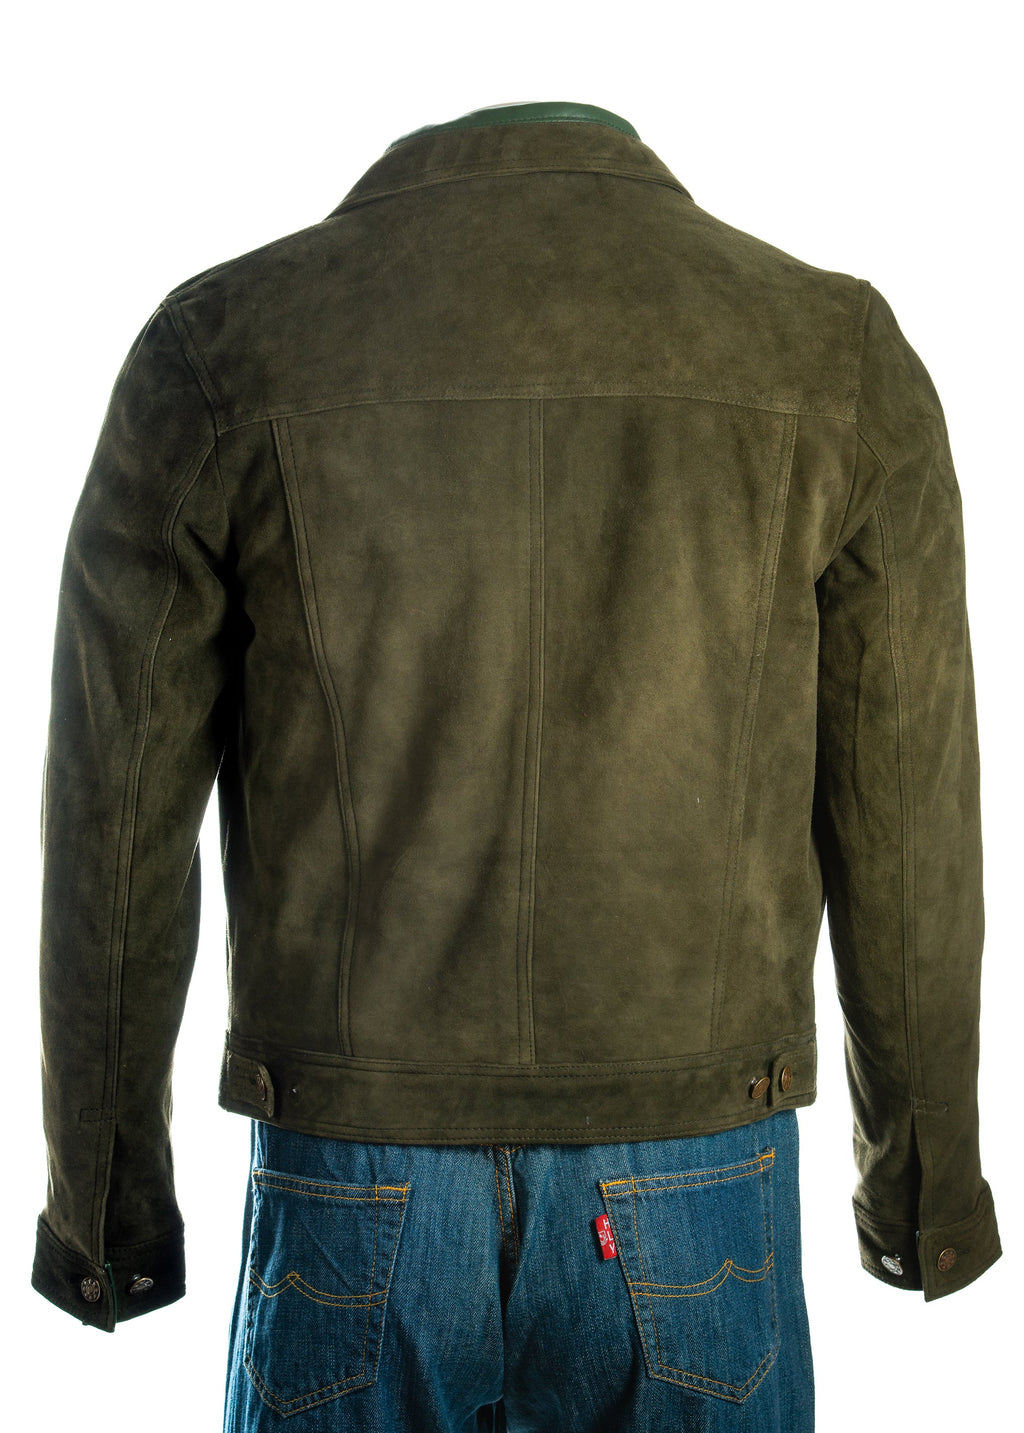 Men's Olive Denim Shirt Style Suede Jacket: Antonio